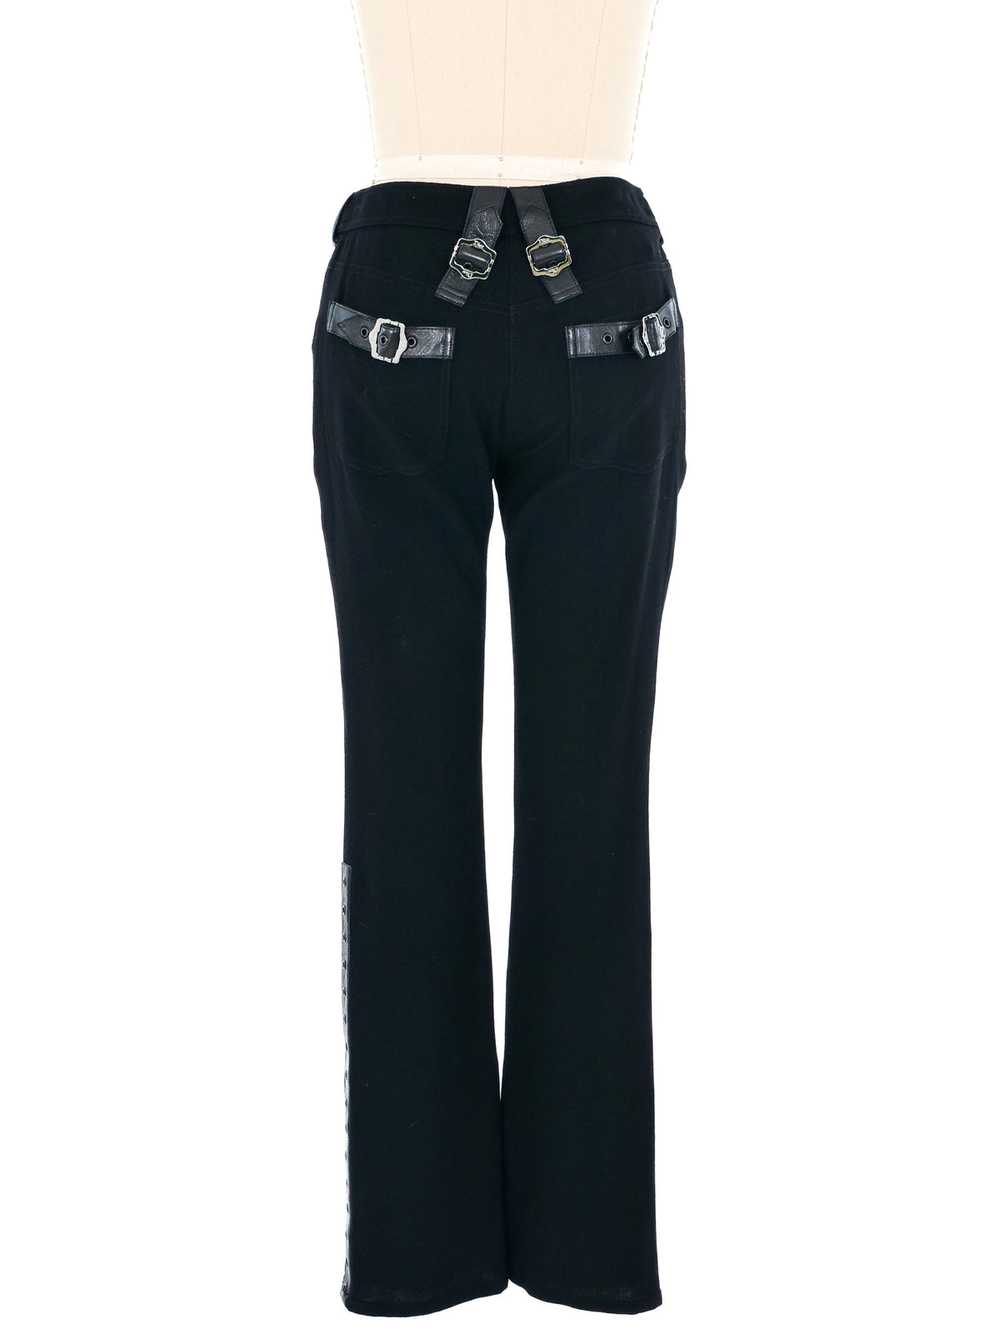 2003 Christian Dior Bondage Trousers - image 1